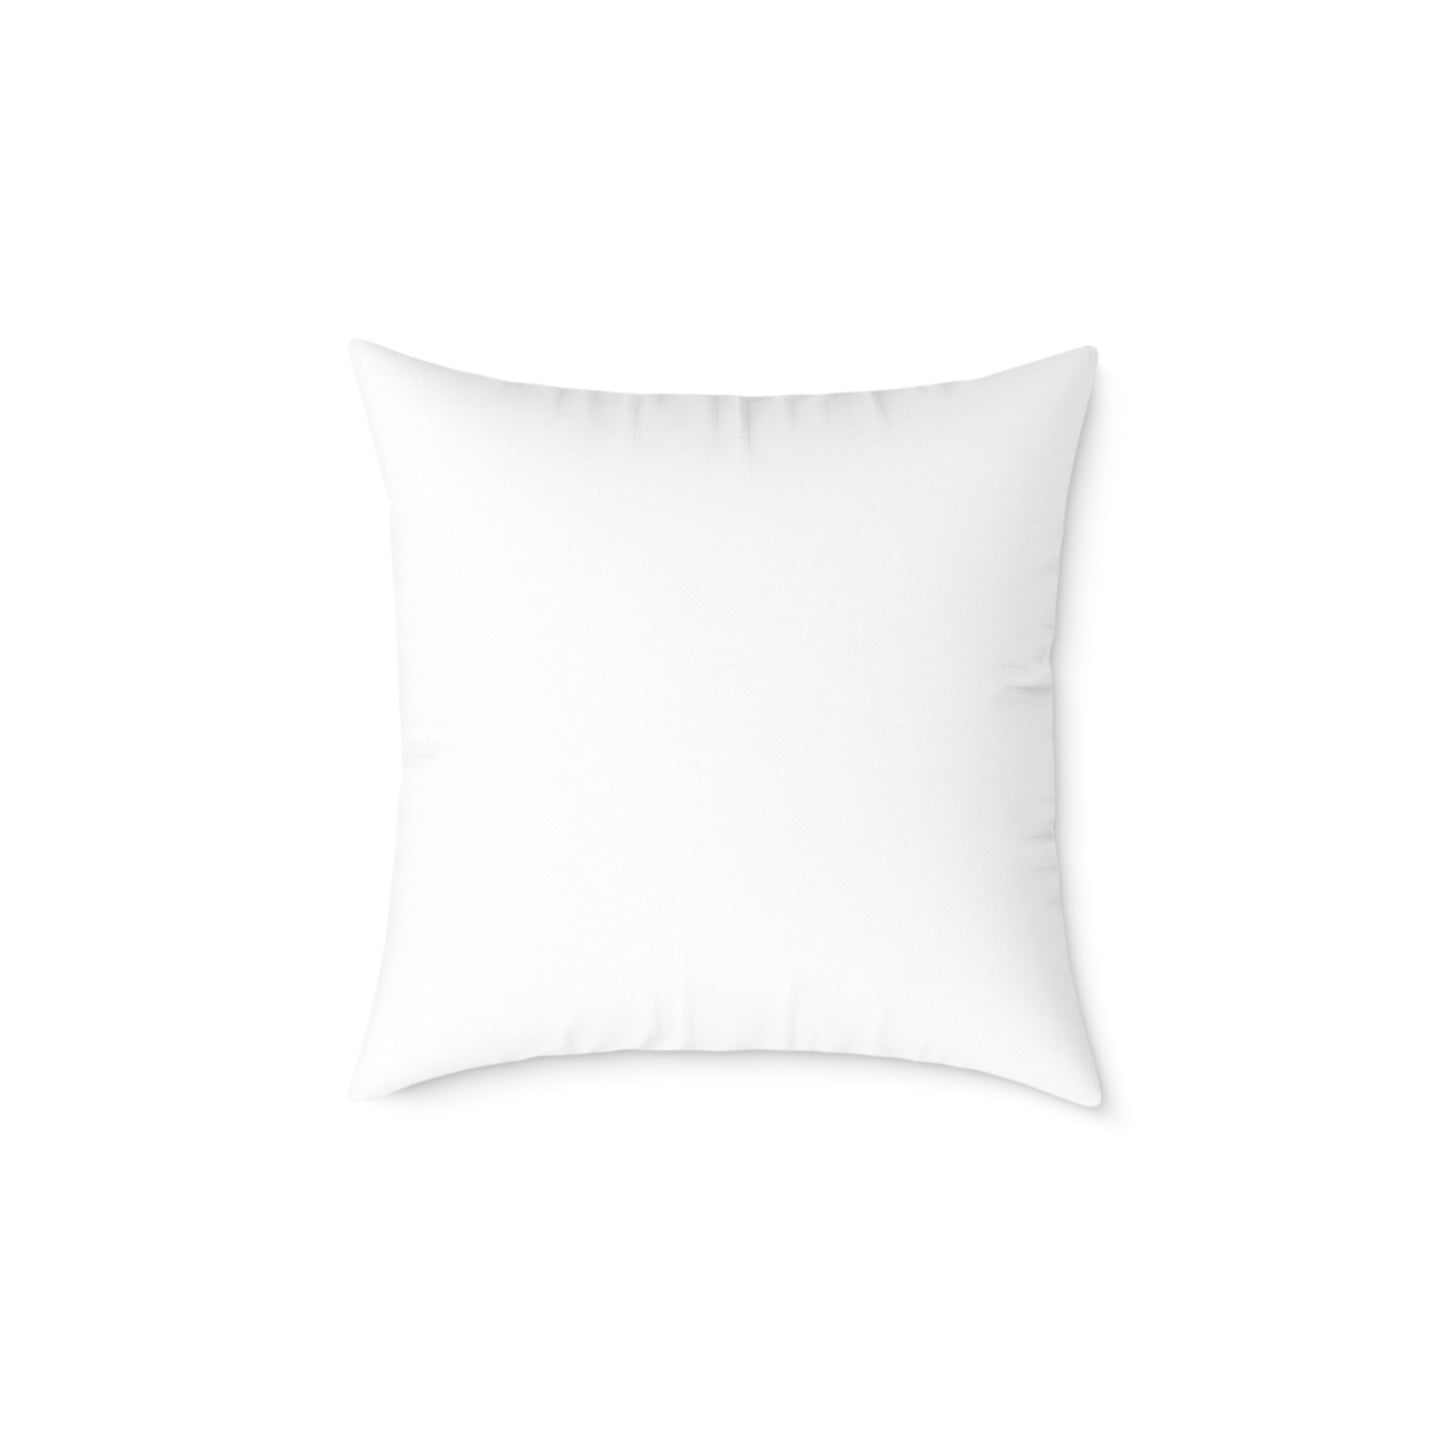 Mermaid at Heart - white - Spun Polyester Pillow